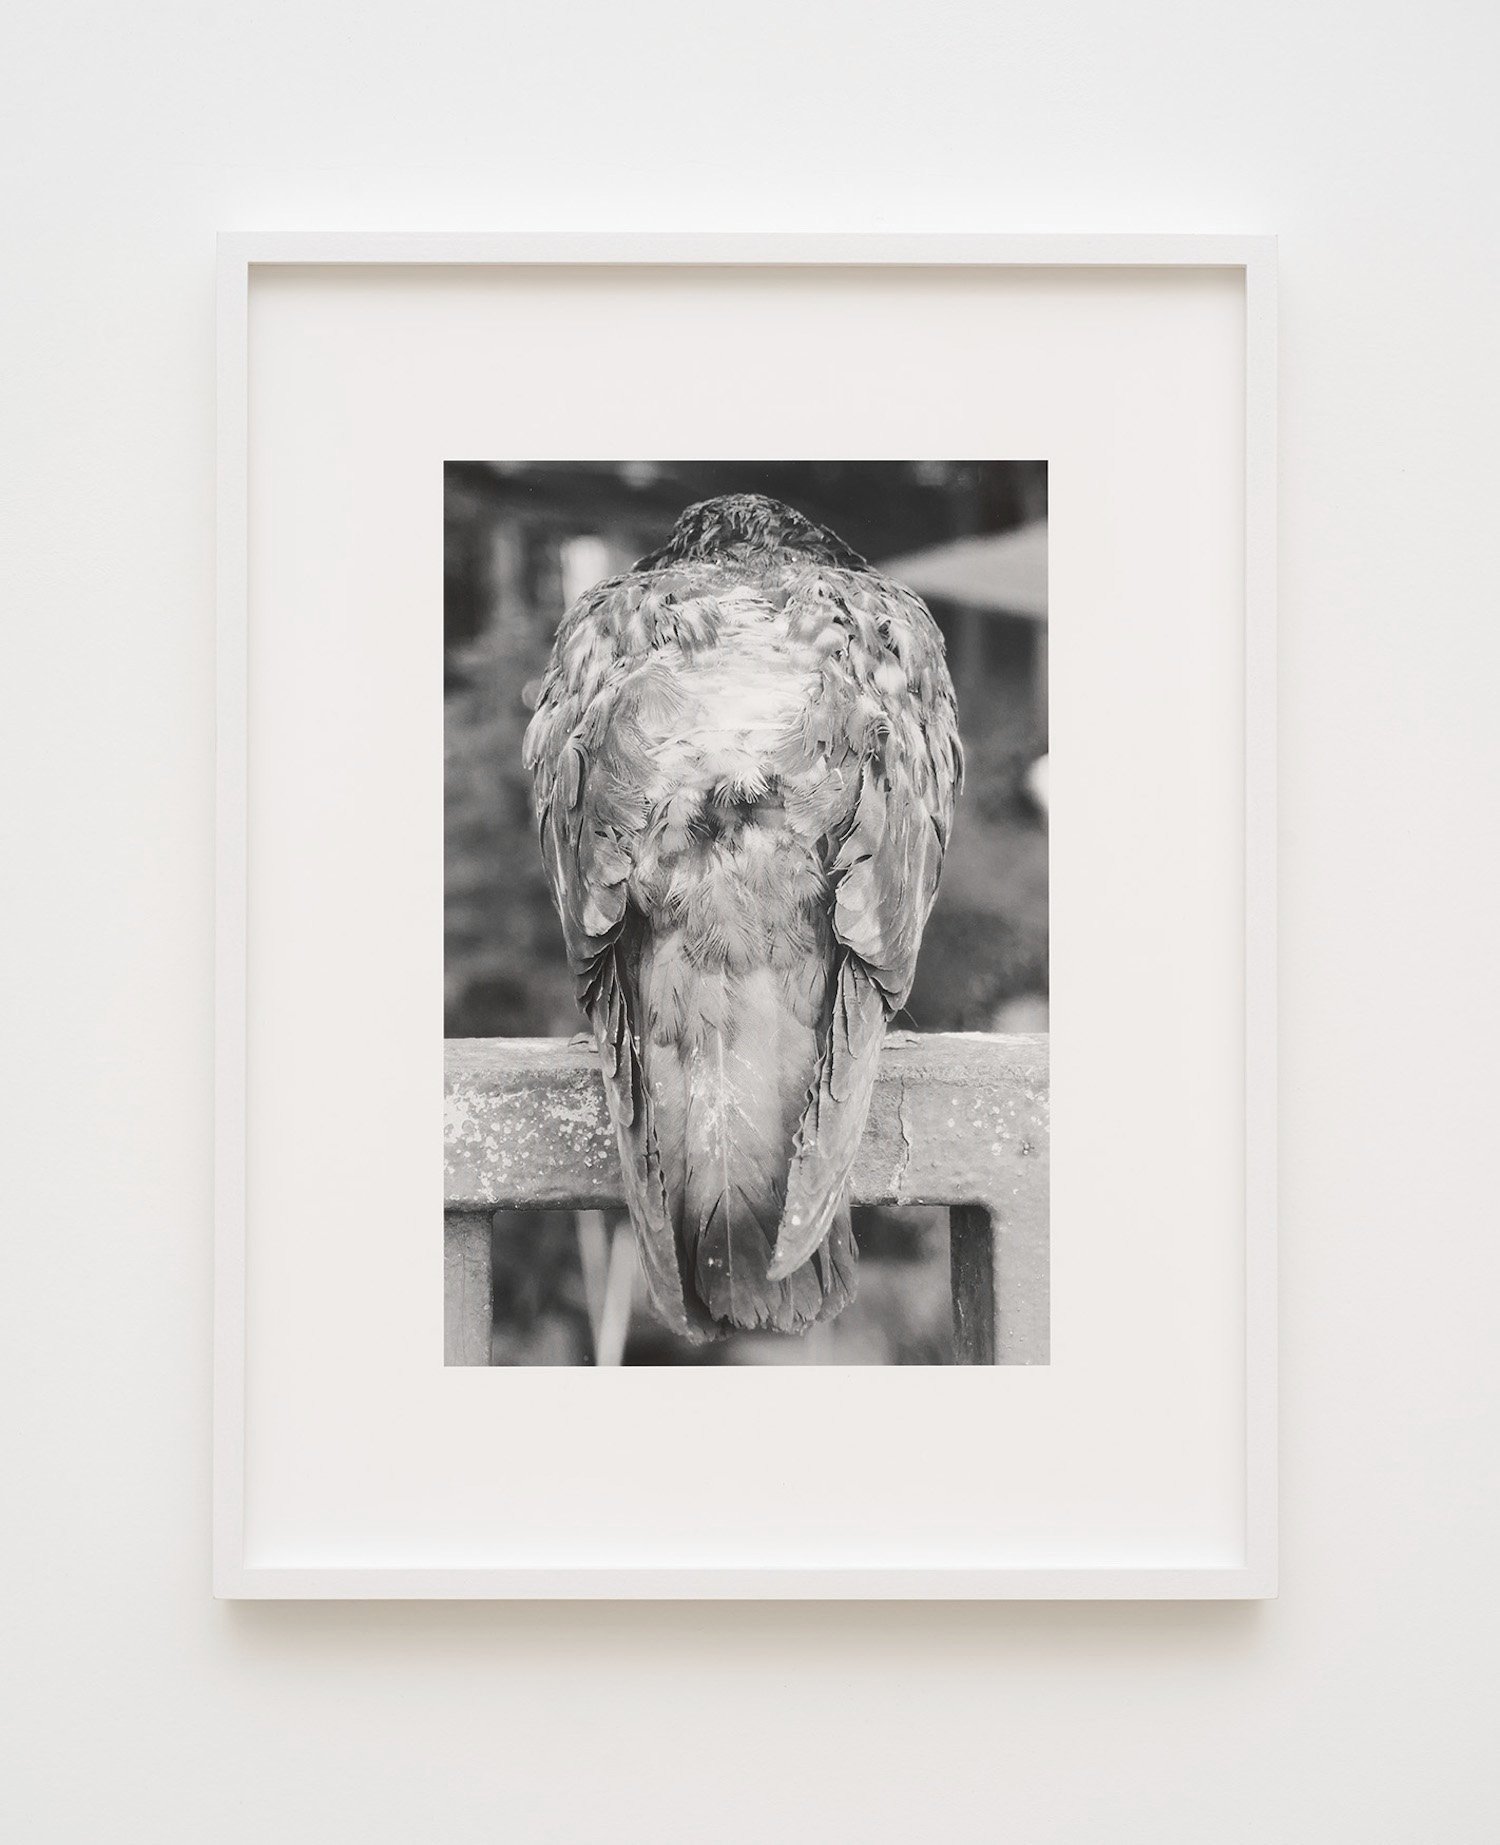  pigeon 2022  28 x 36 cm, archival pigment print on cotton rag (ed. of 3 + 1 ap) 